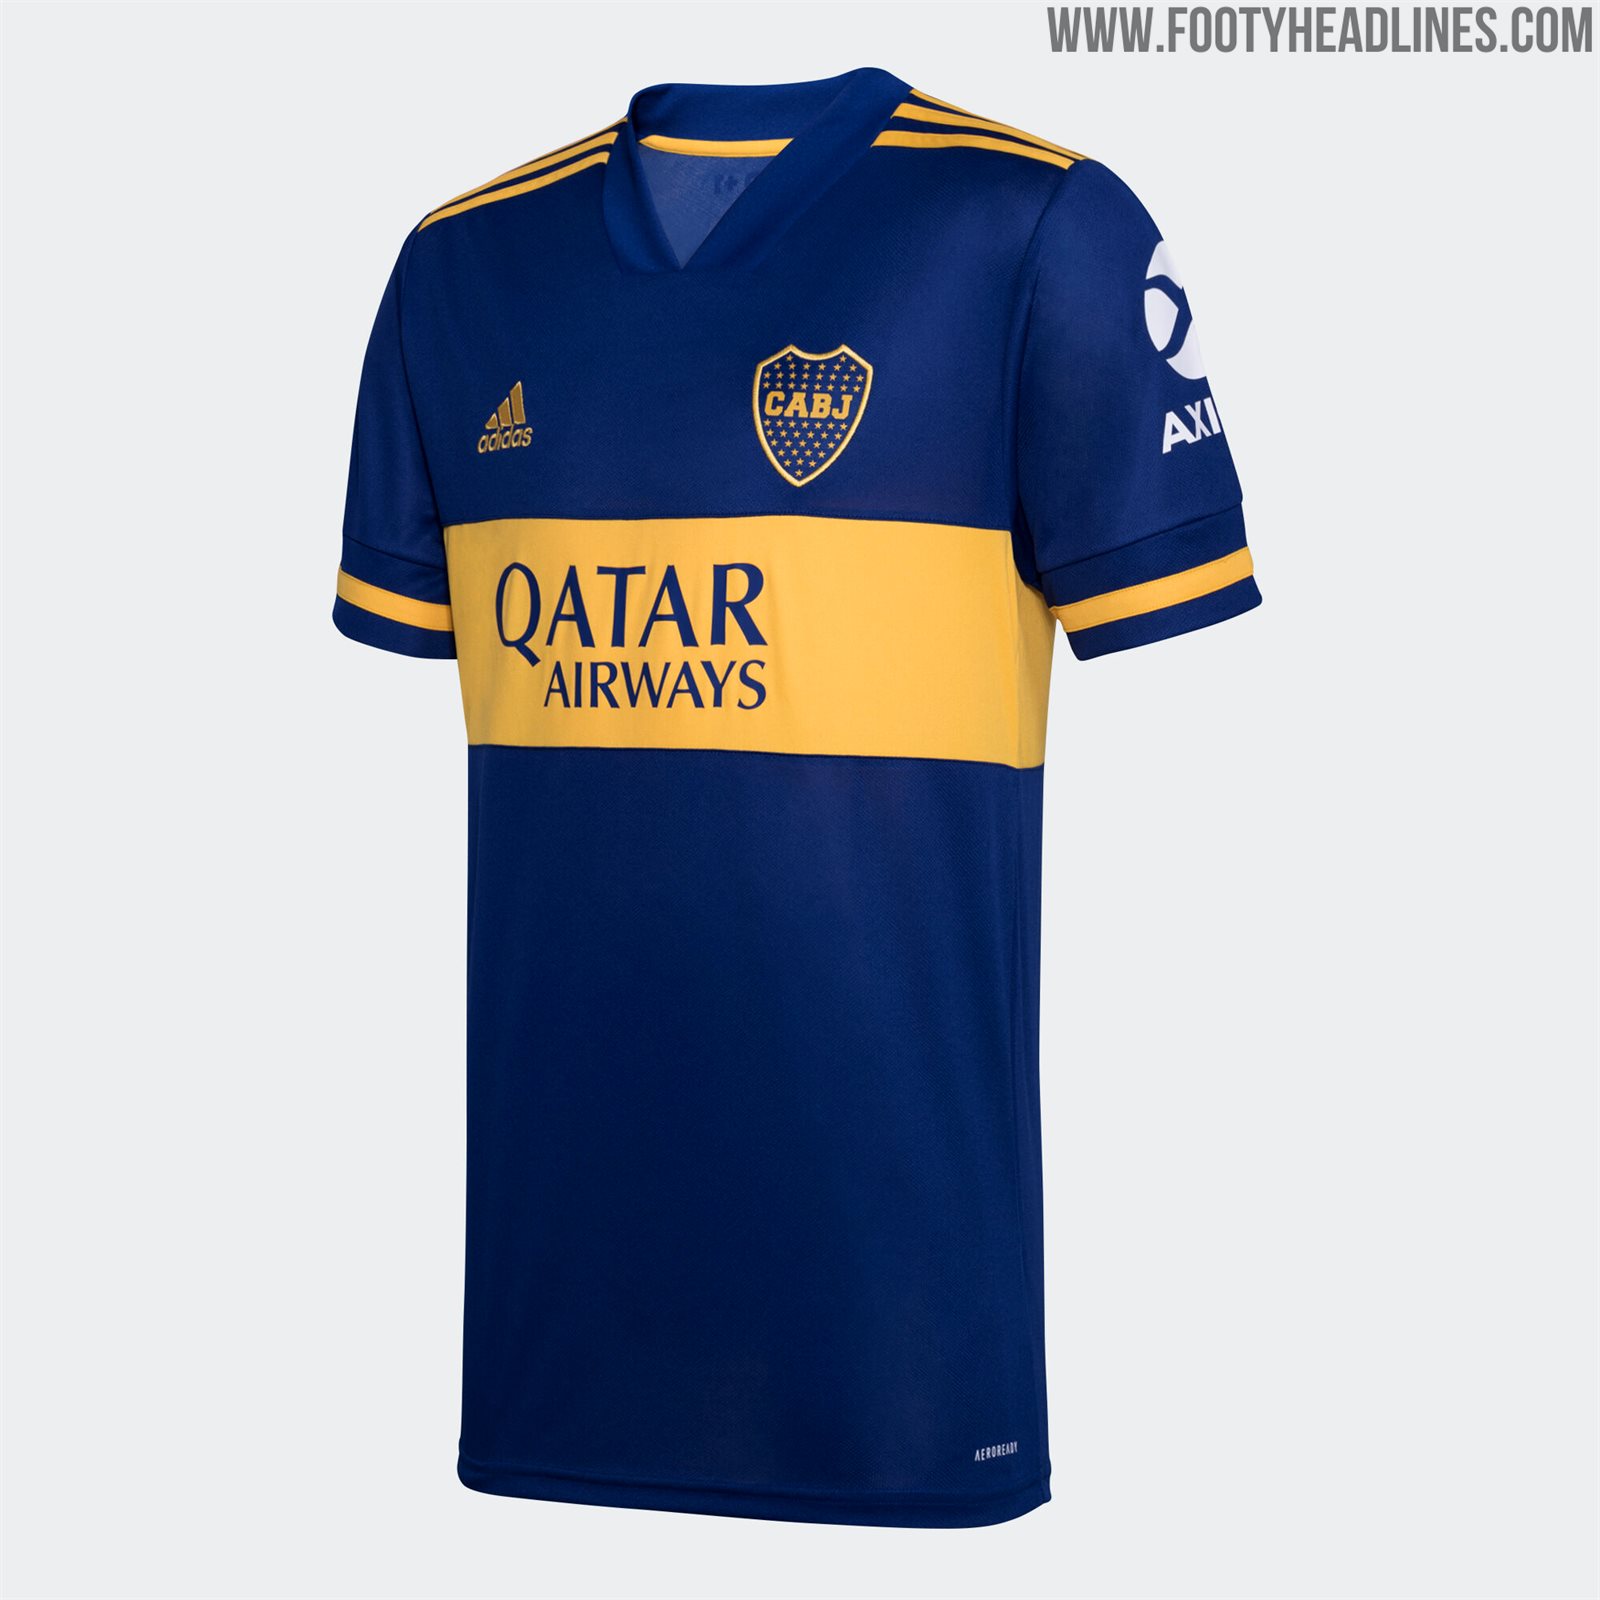 Adidas Boca Juniors 2020 Home & Kits Released - No More Nike 23 - Footy Headlines